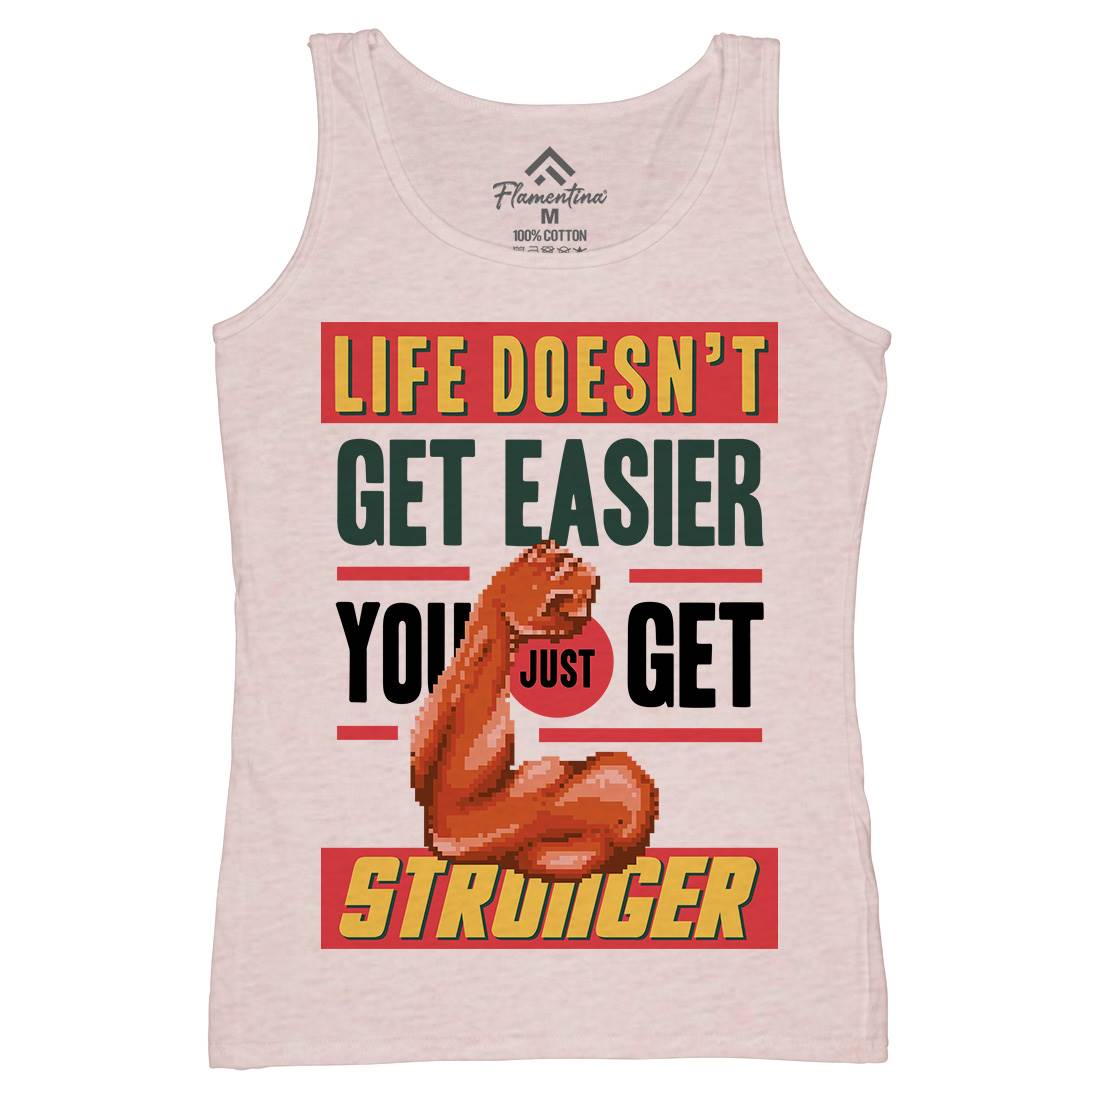 Get Stronger Womens Organic Tank Top Vest Gym B904